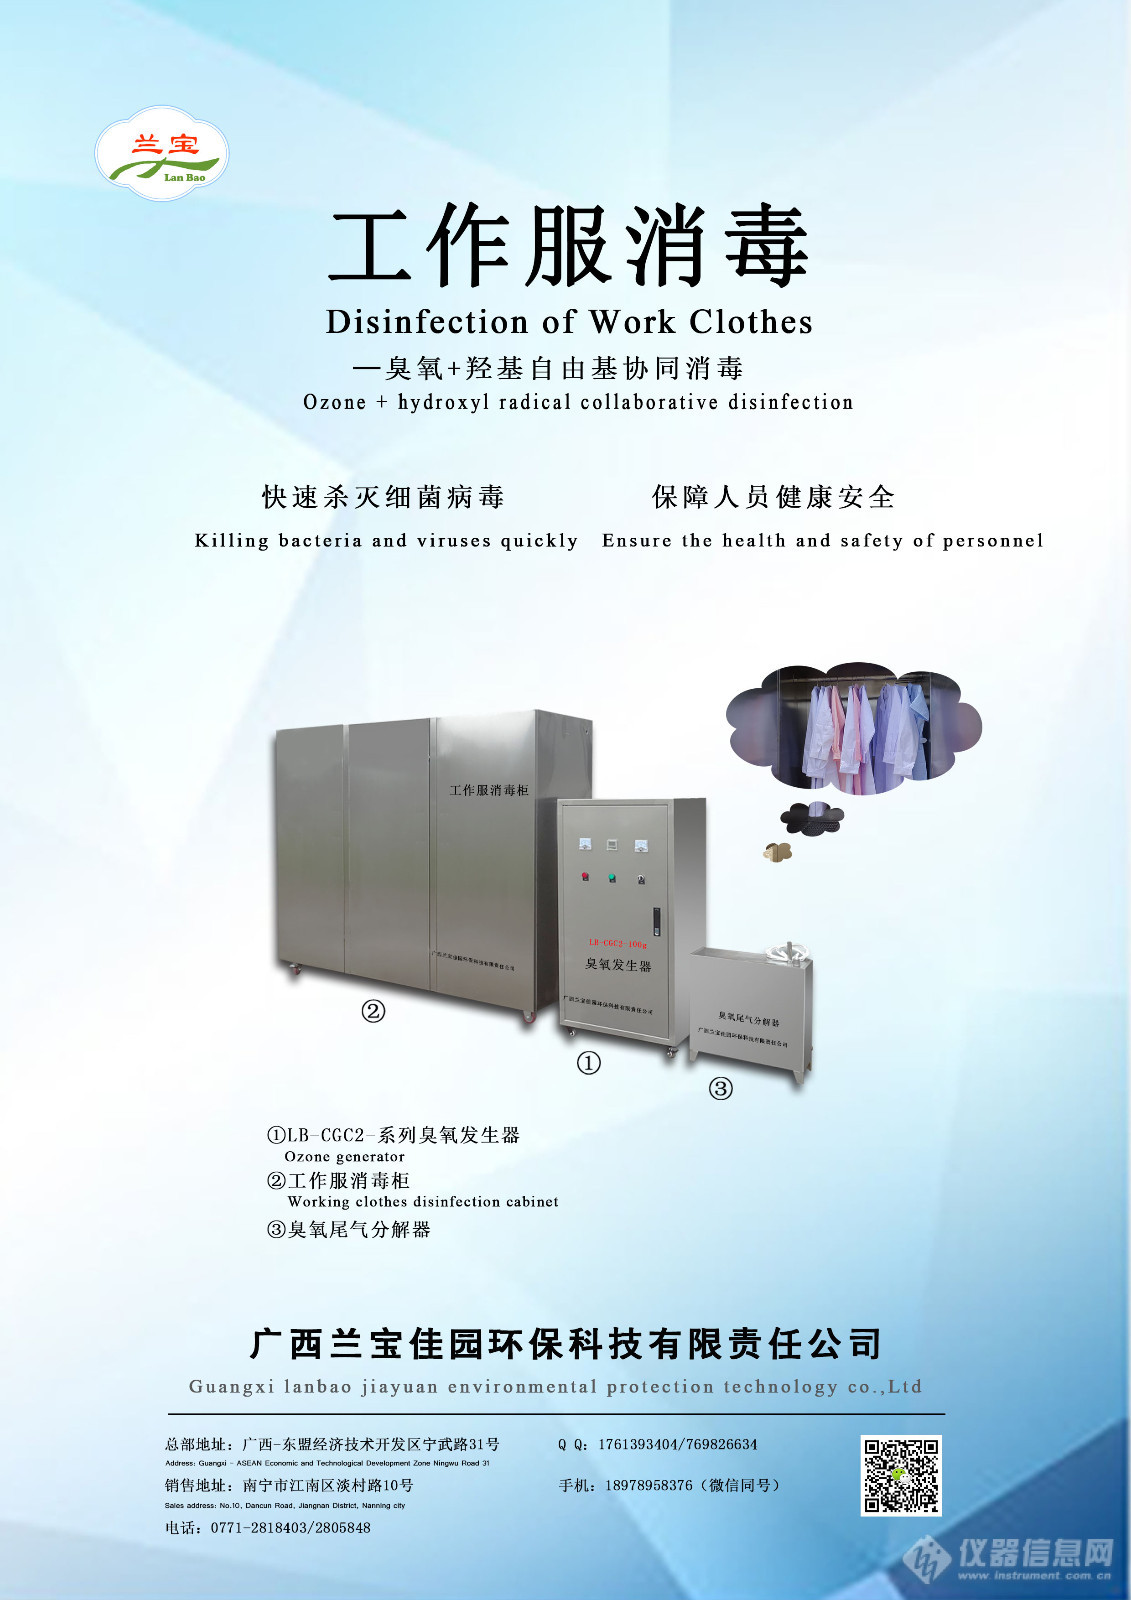 LB-CGC2-系列臭氧发生器-工作服消毒柜、臭氧尾气分解.jpg